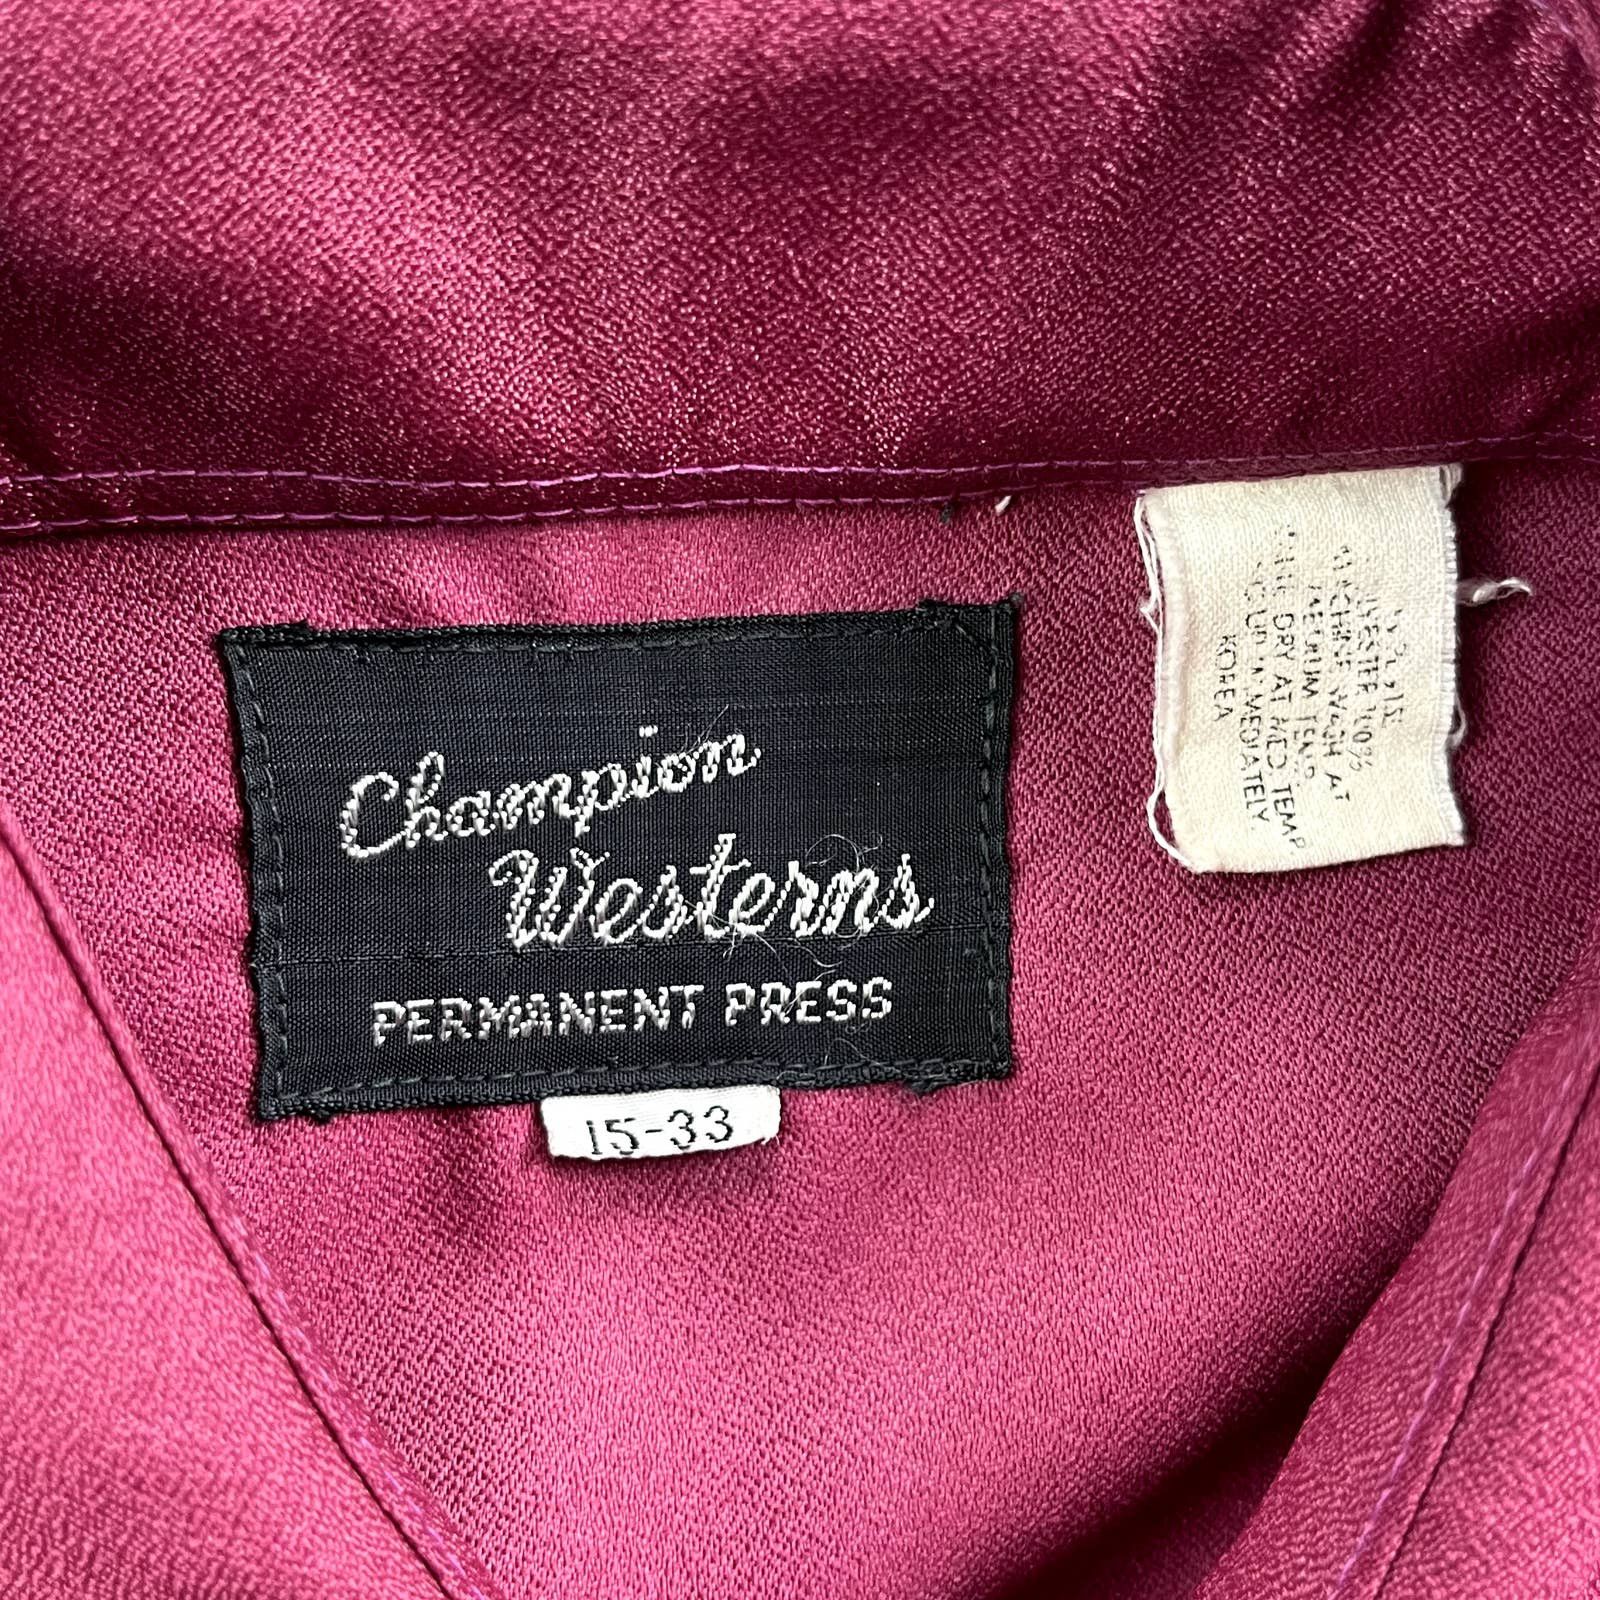 Vintage Vintage Champion Westerns Shirt Medium 15-33 Pink Pearl Snap Size US M / EU 48-50 / 2 - 5 Thumbnail